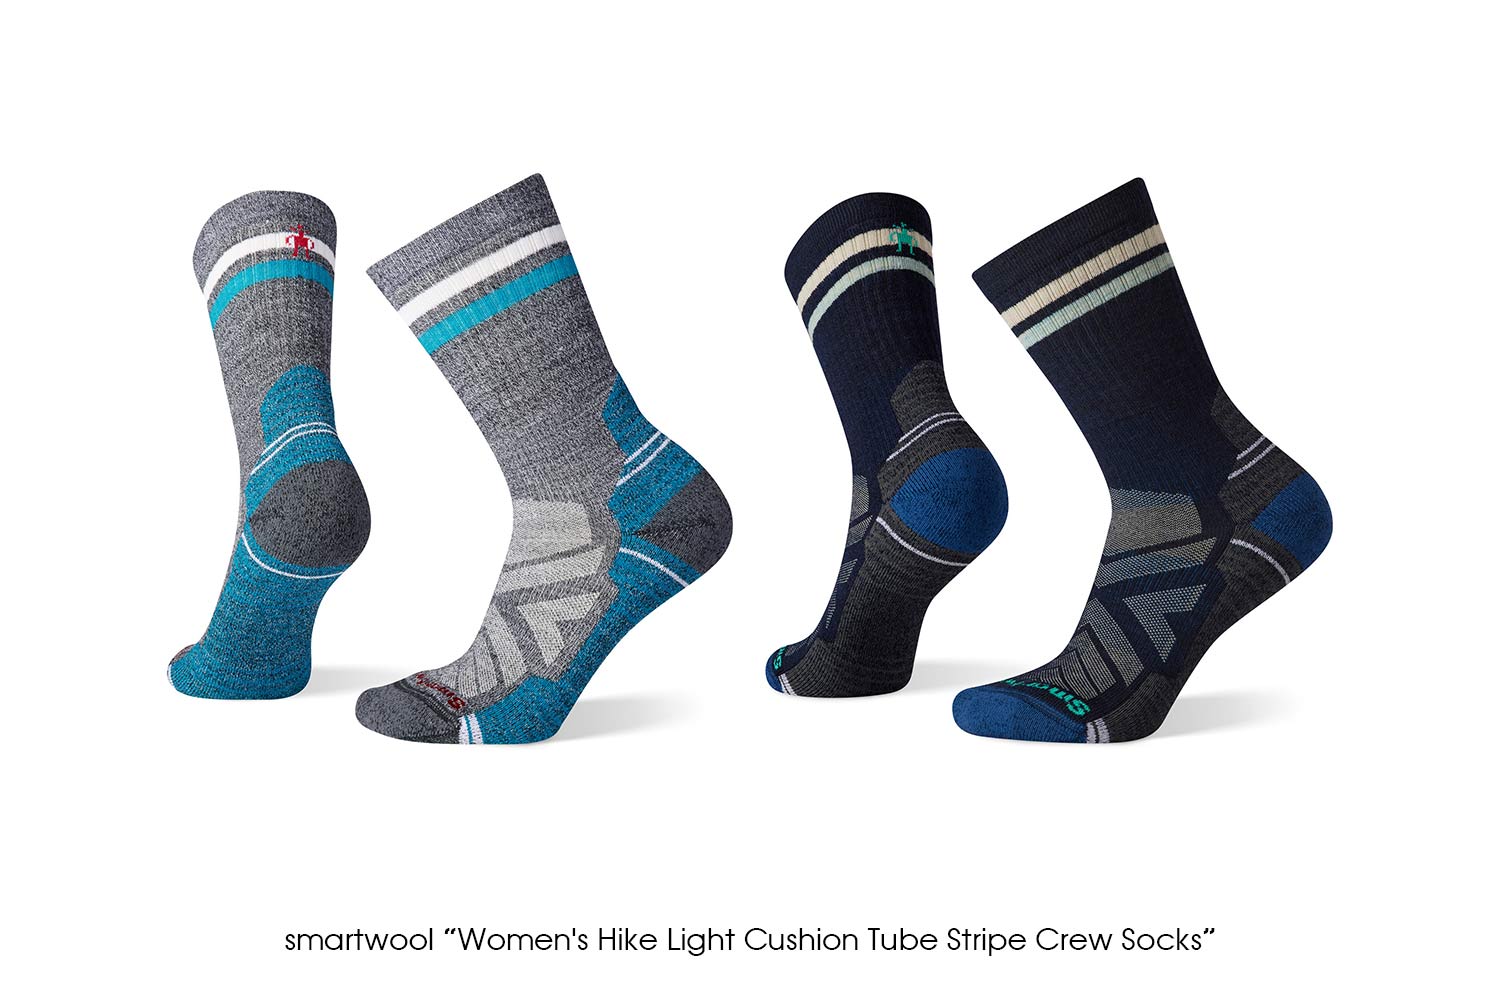 smartwool "Women's Hike Light Cushion Tube Stripe Crew Socks"